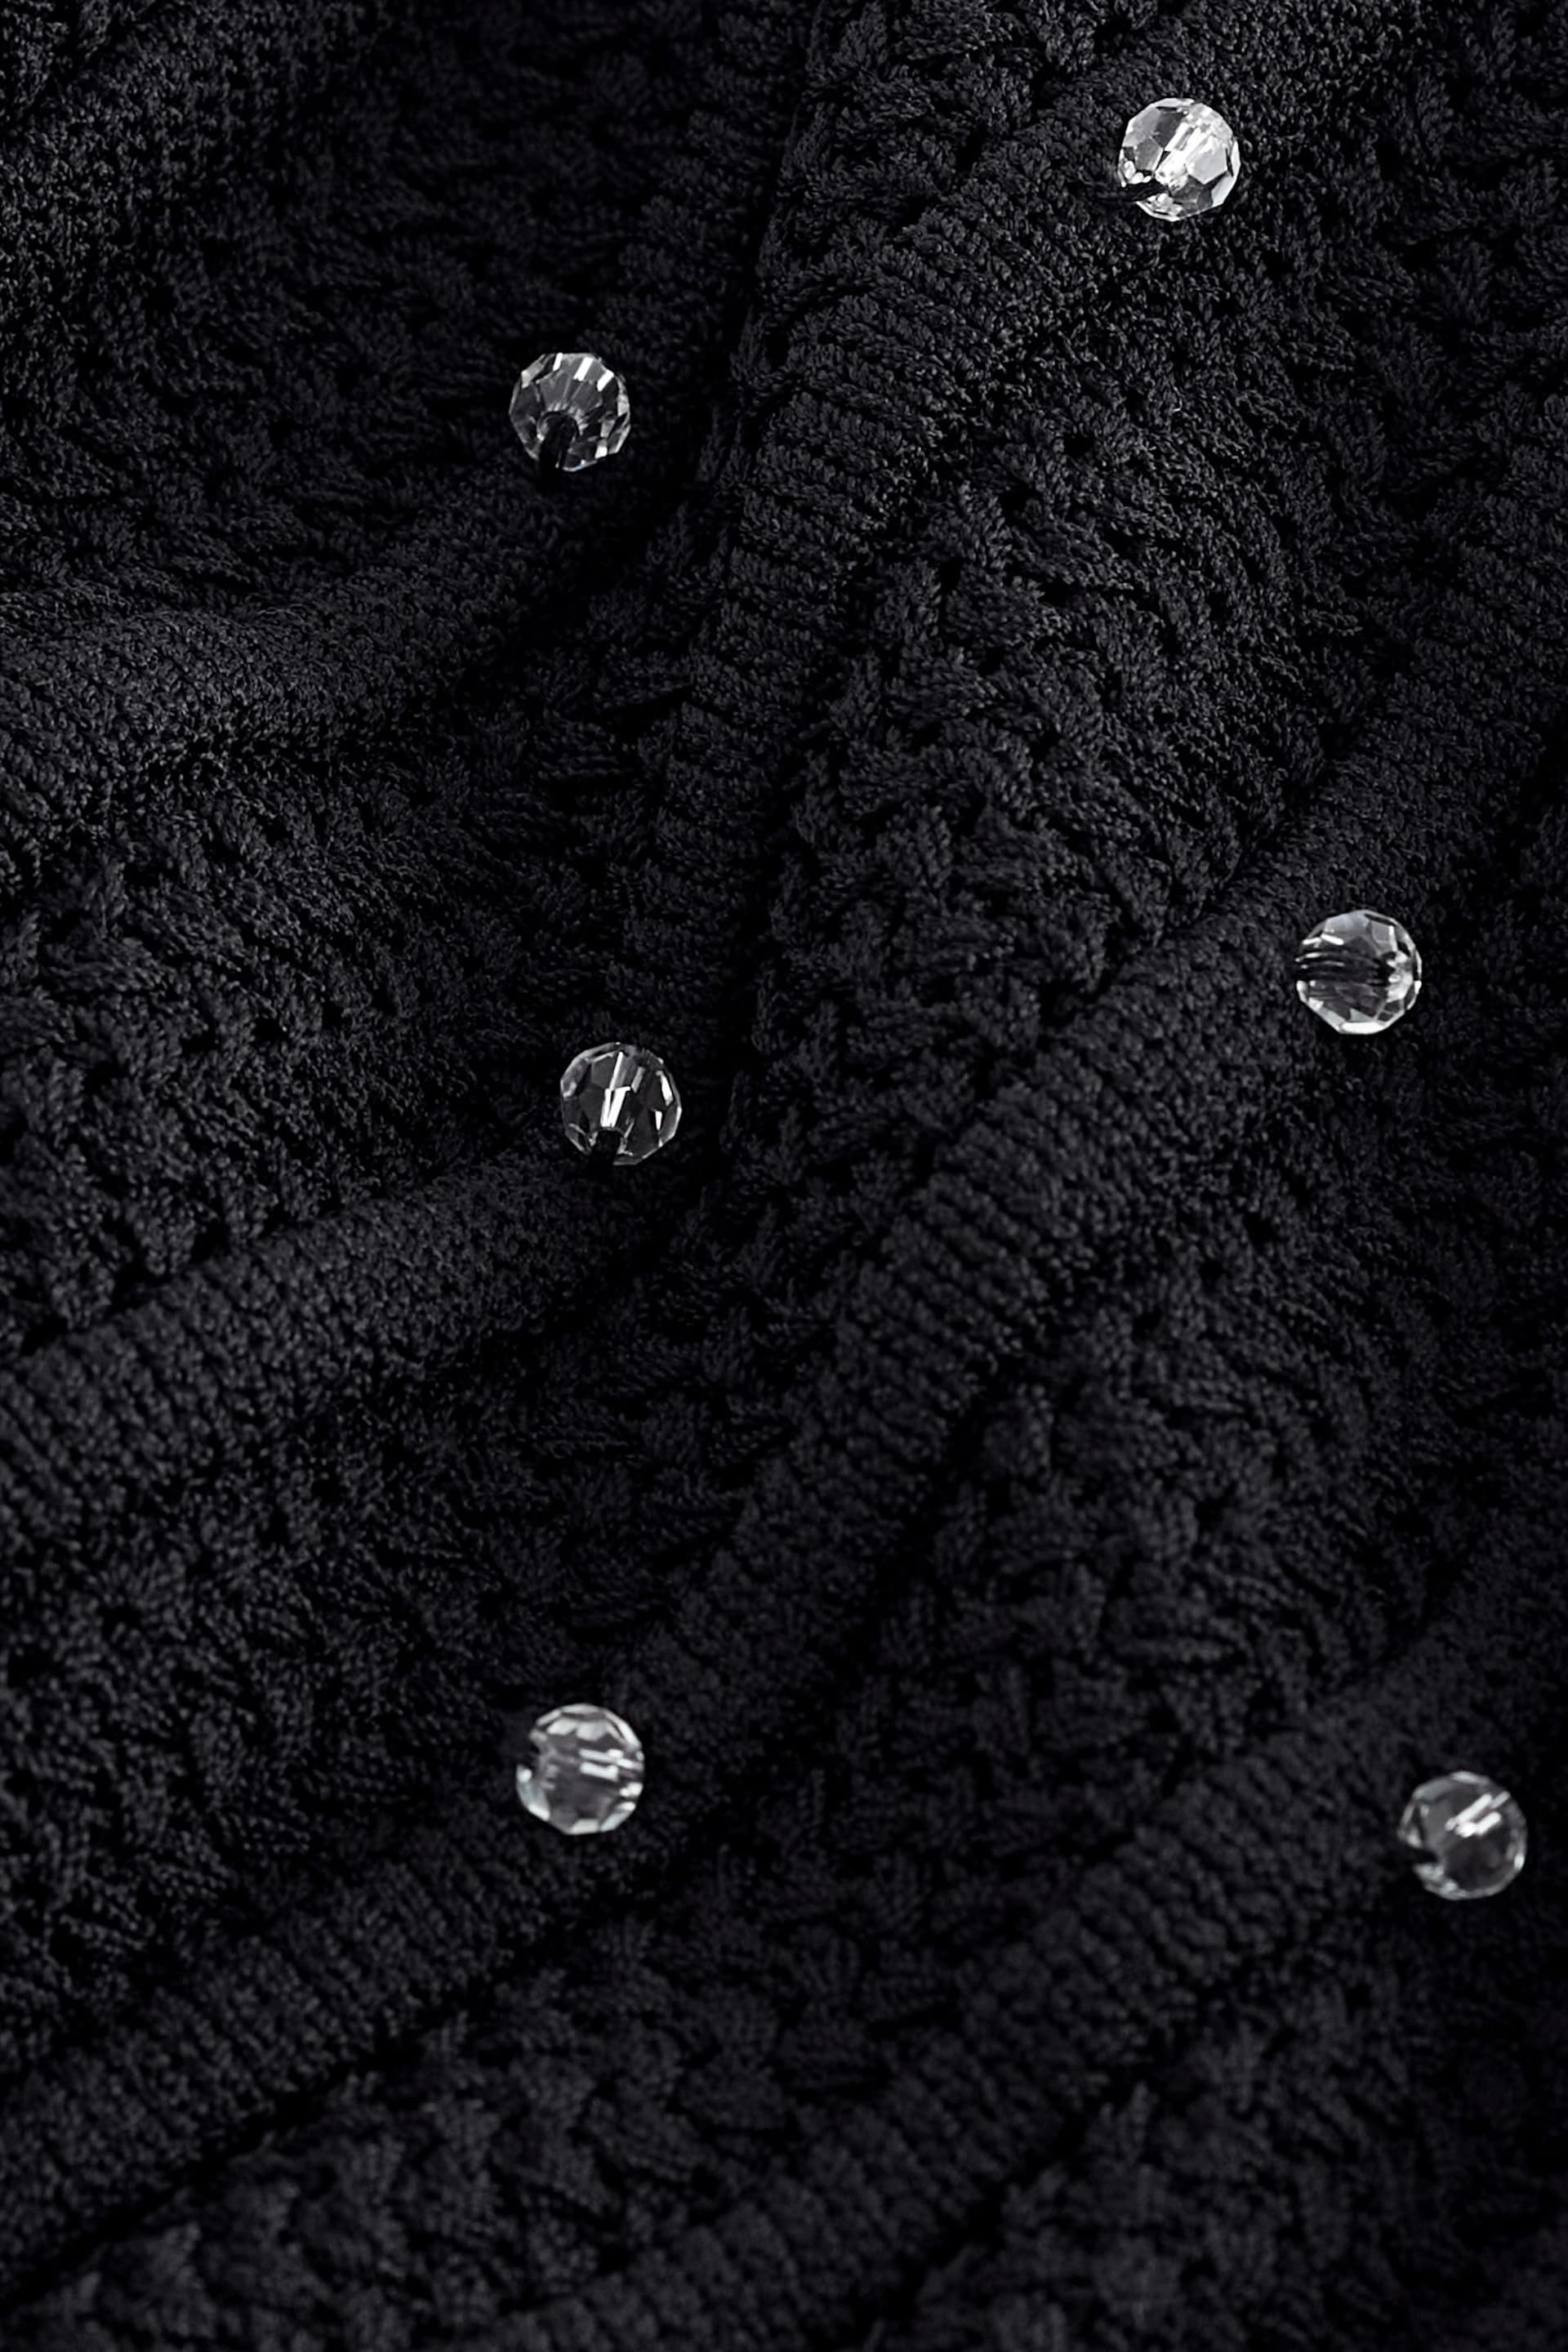 Black Sleeveless Embellished Vest Top - Image 5 of 5